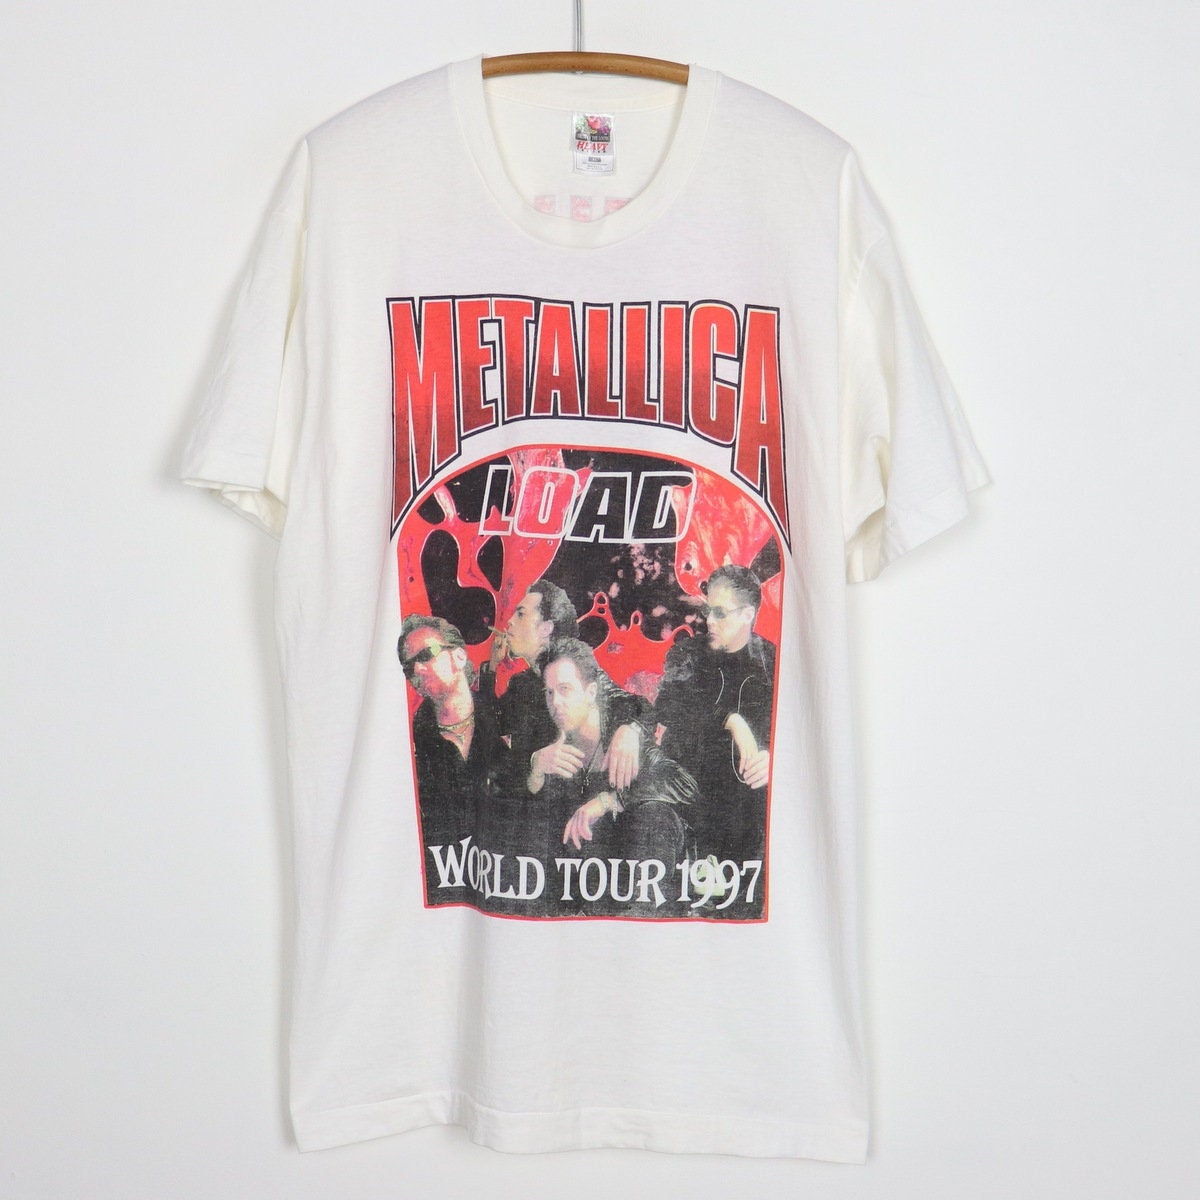 Vintage 1997 Metallica Load World Tour Shirt - Etsy